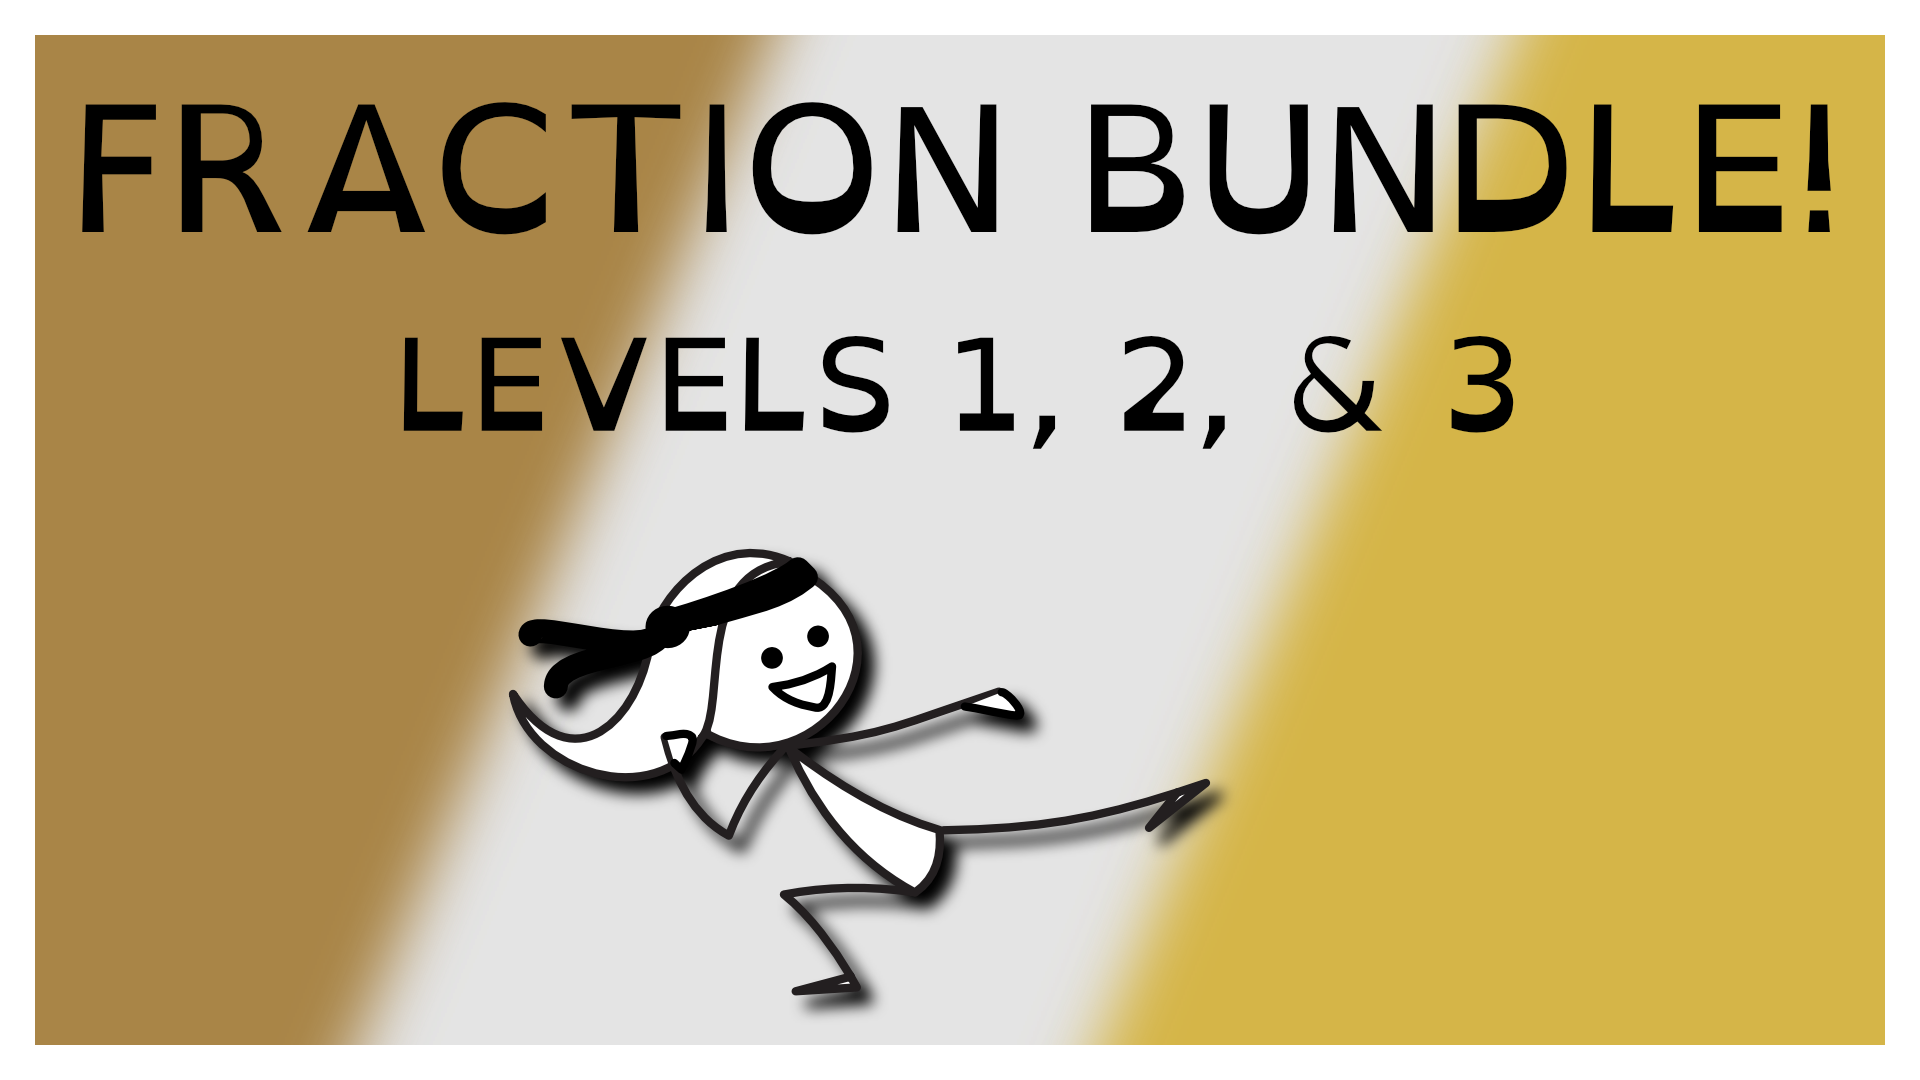 Fraction Bundle levels 1, 2, and 3